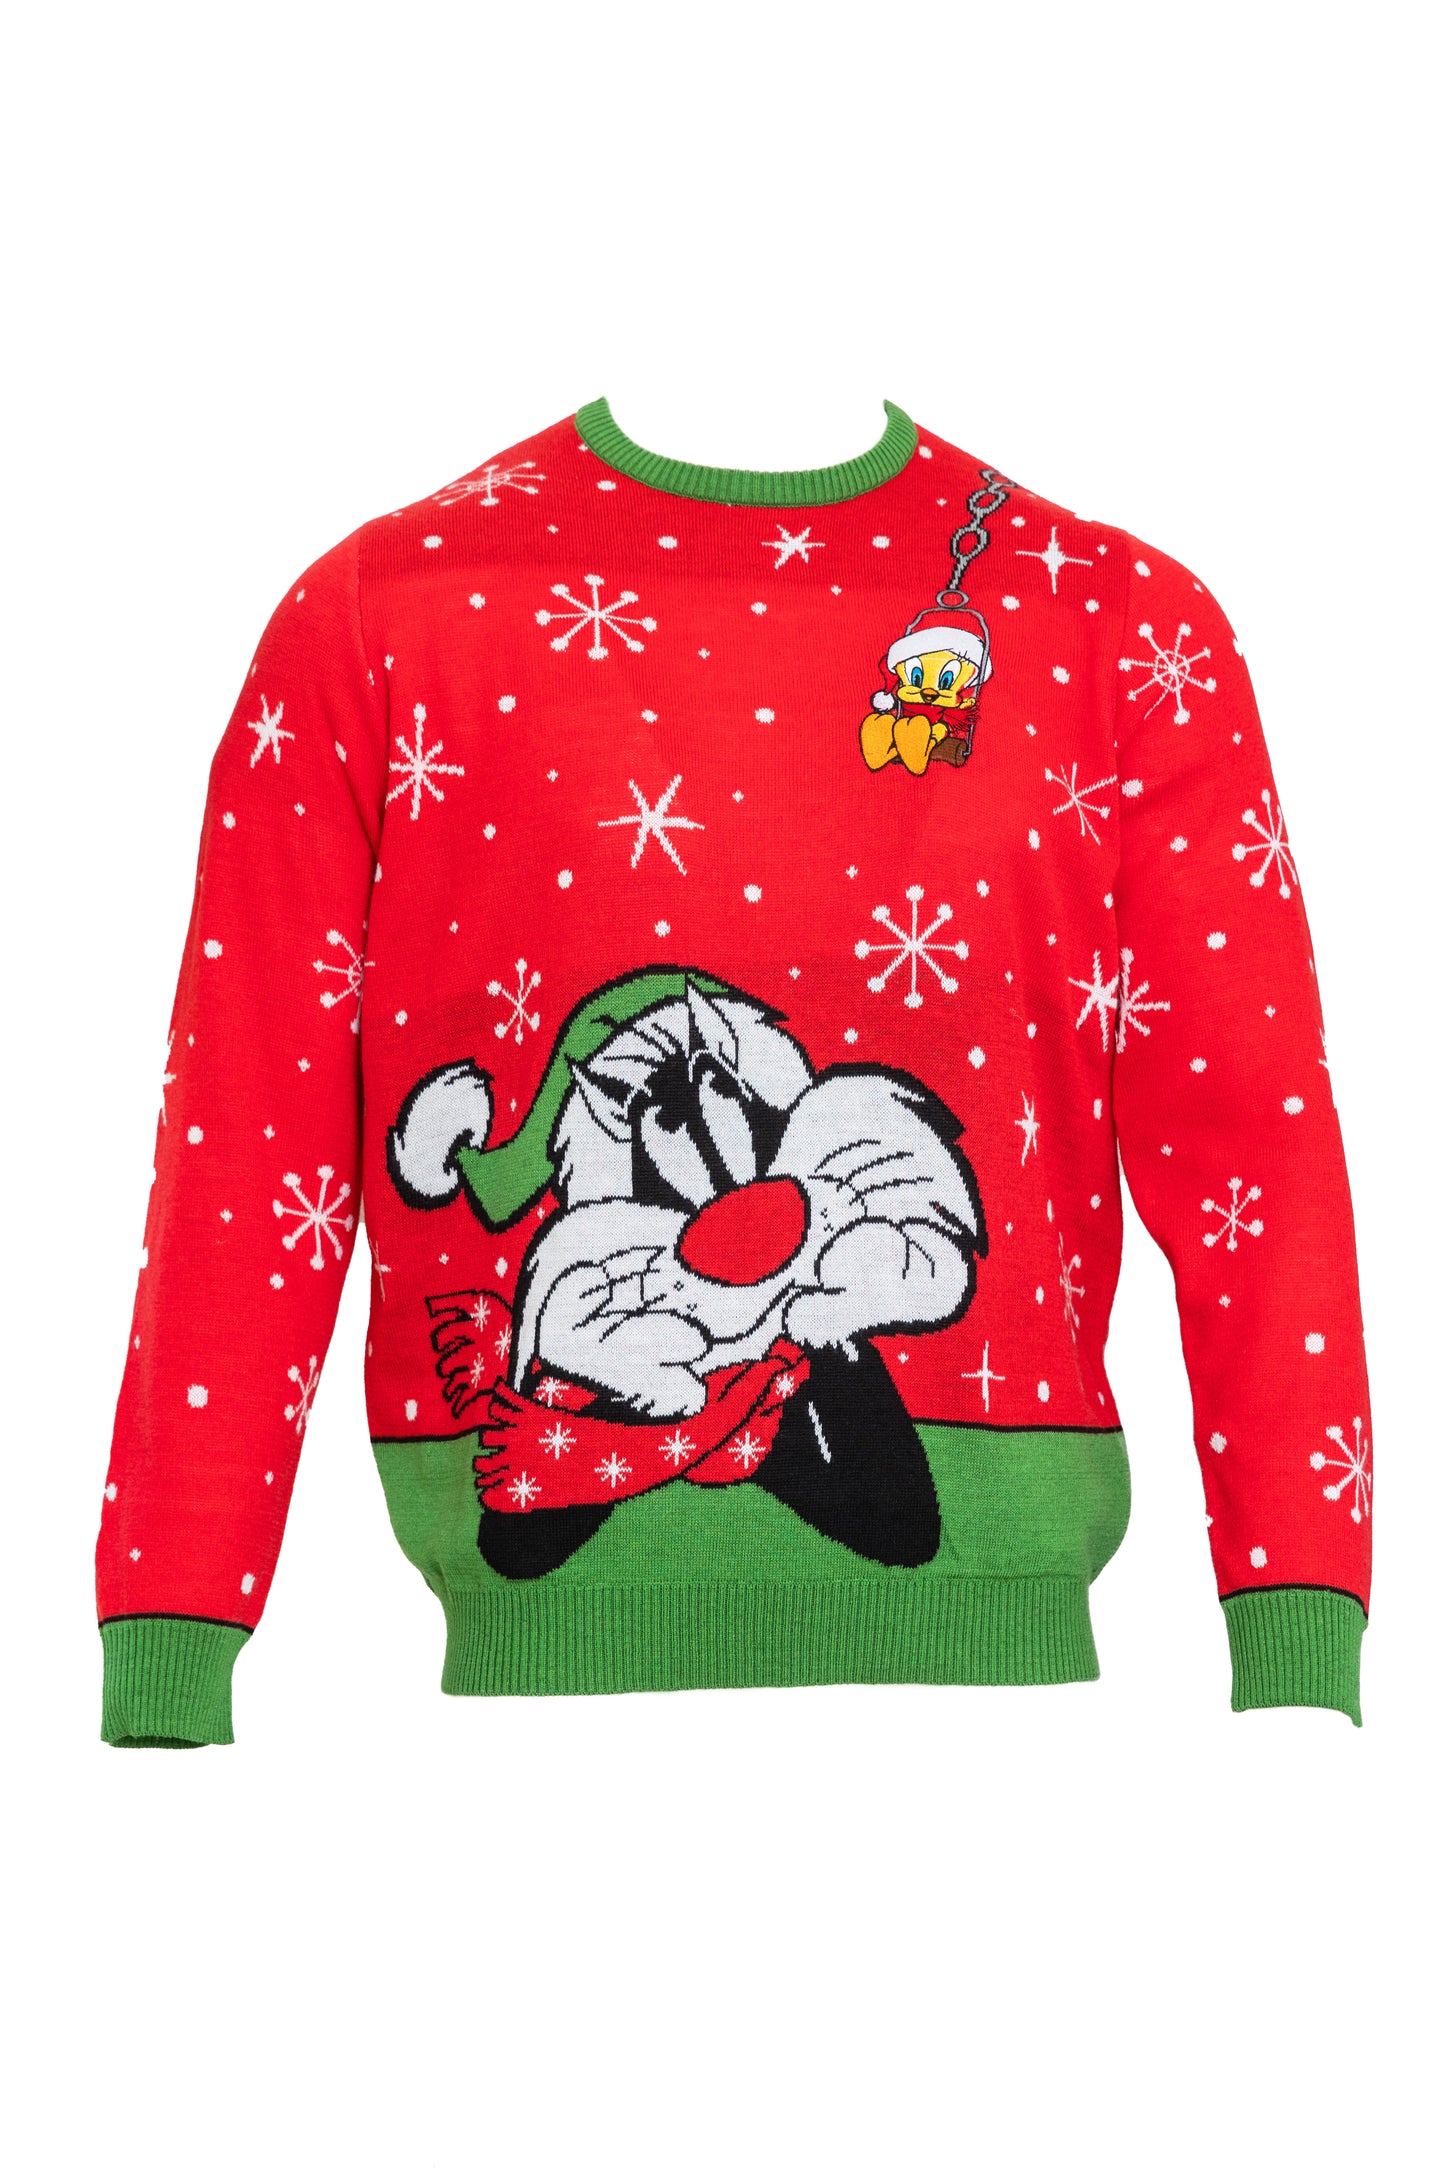 Looney Tunes Christmas sweater